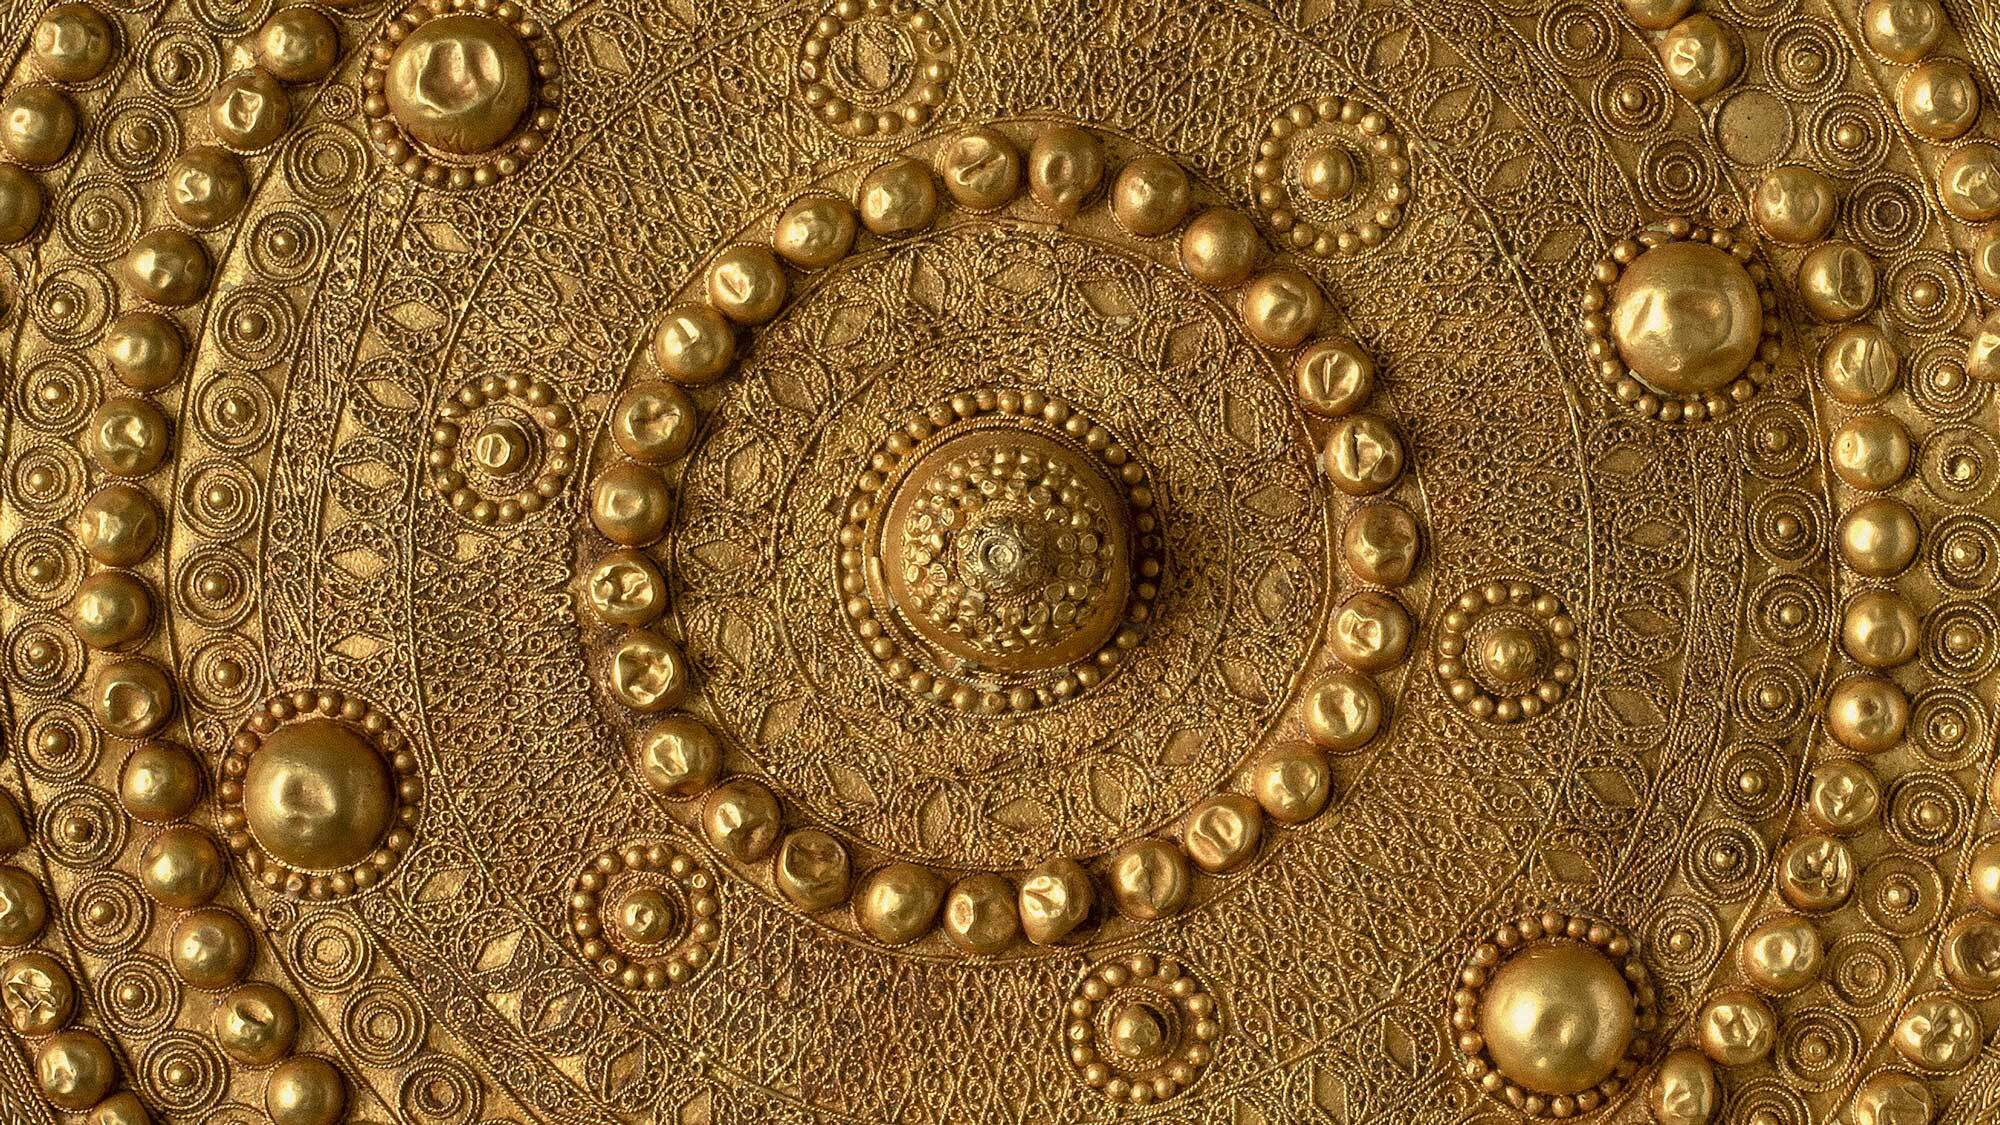 An ornate gold pectoral